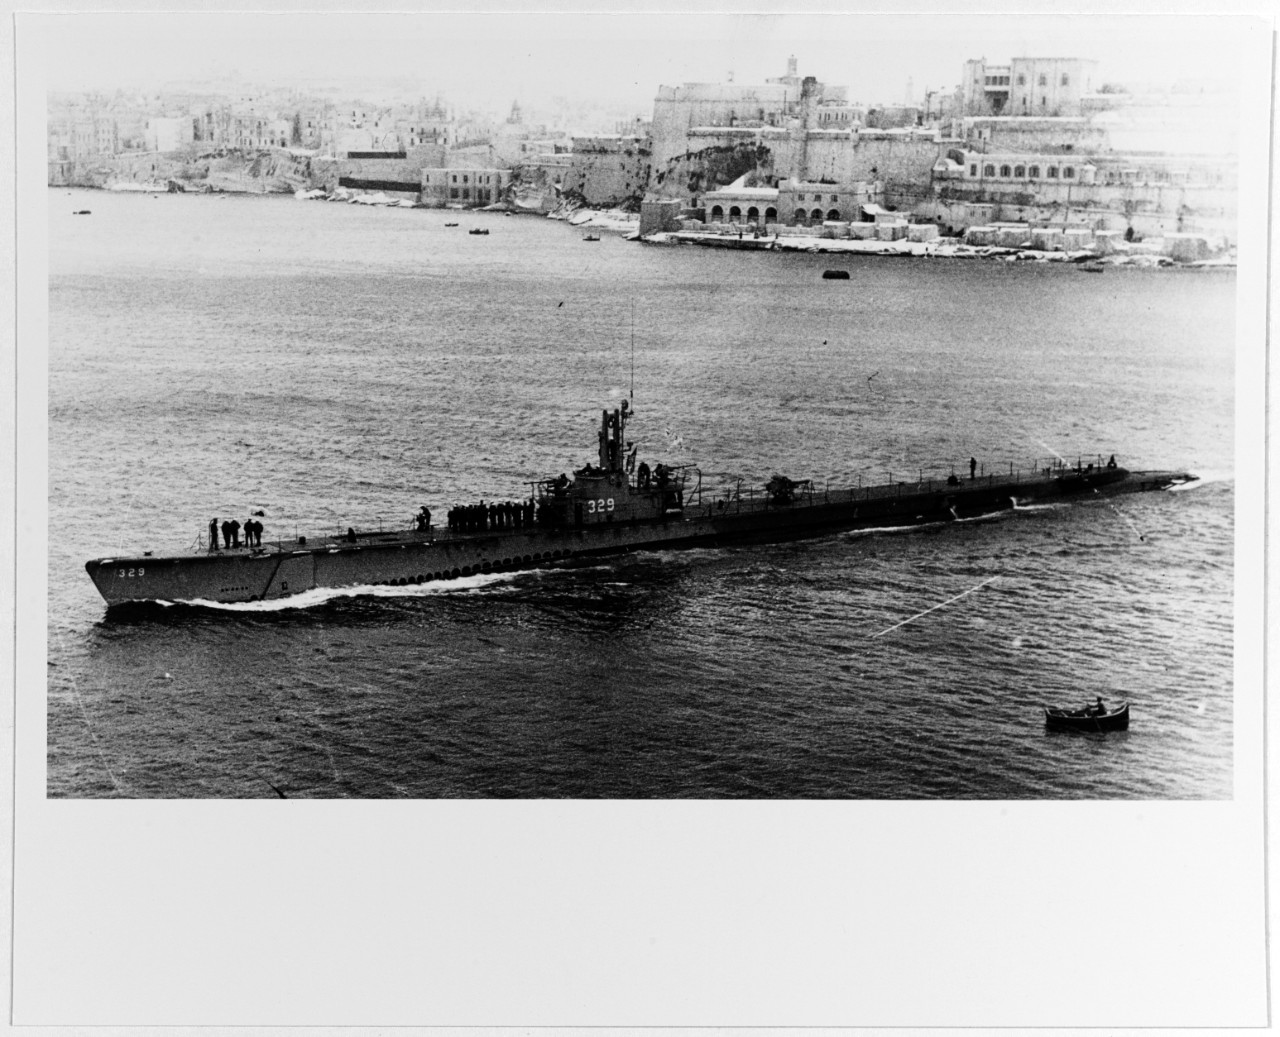 USS CHUB (SS-329)